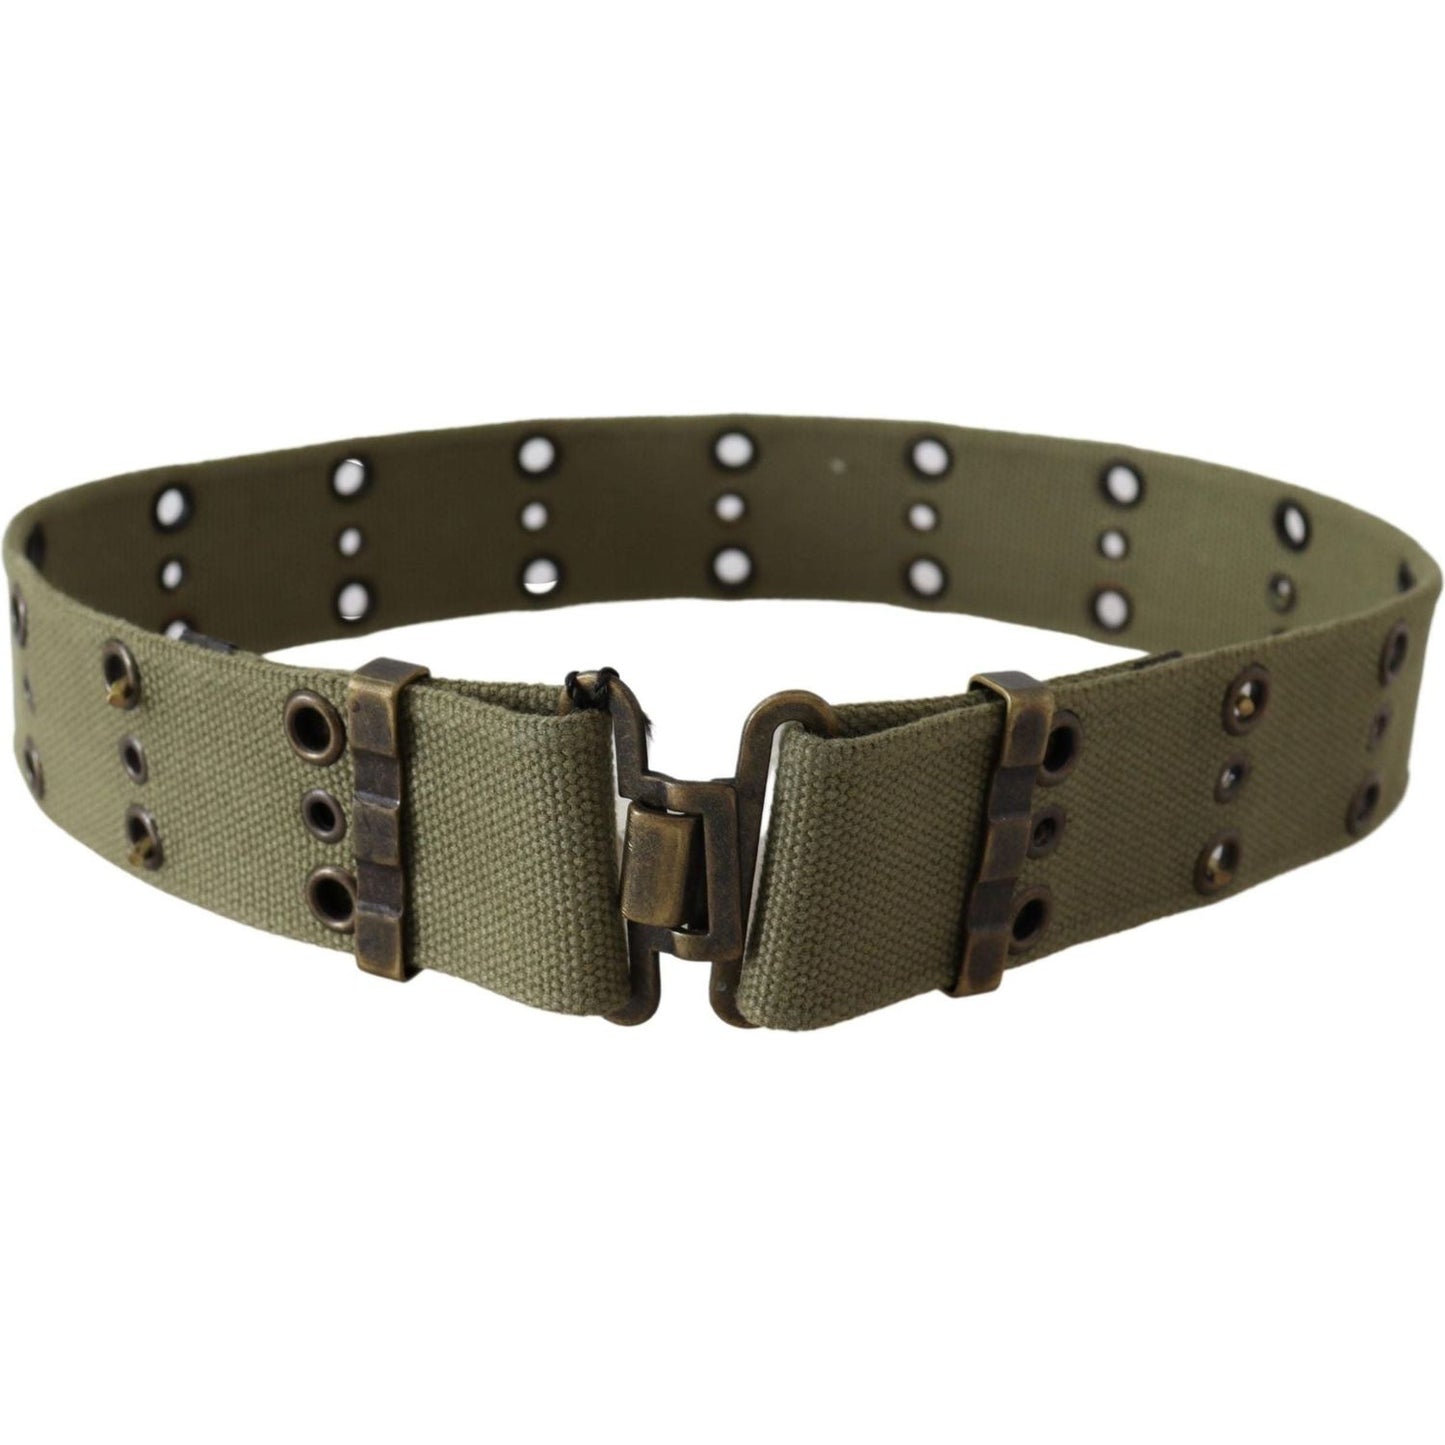 Ermanno Scervino Chic Army Green Cotton Waist Belt Belt green-100-cotton-rustic-bronze-buckle-belt IMG_0835-scaled-4b5b4a87-d21.jpg